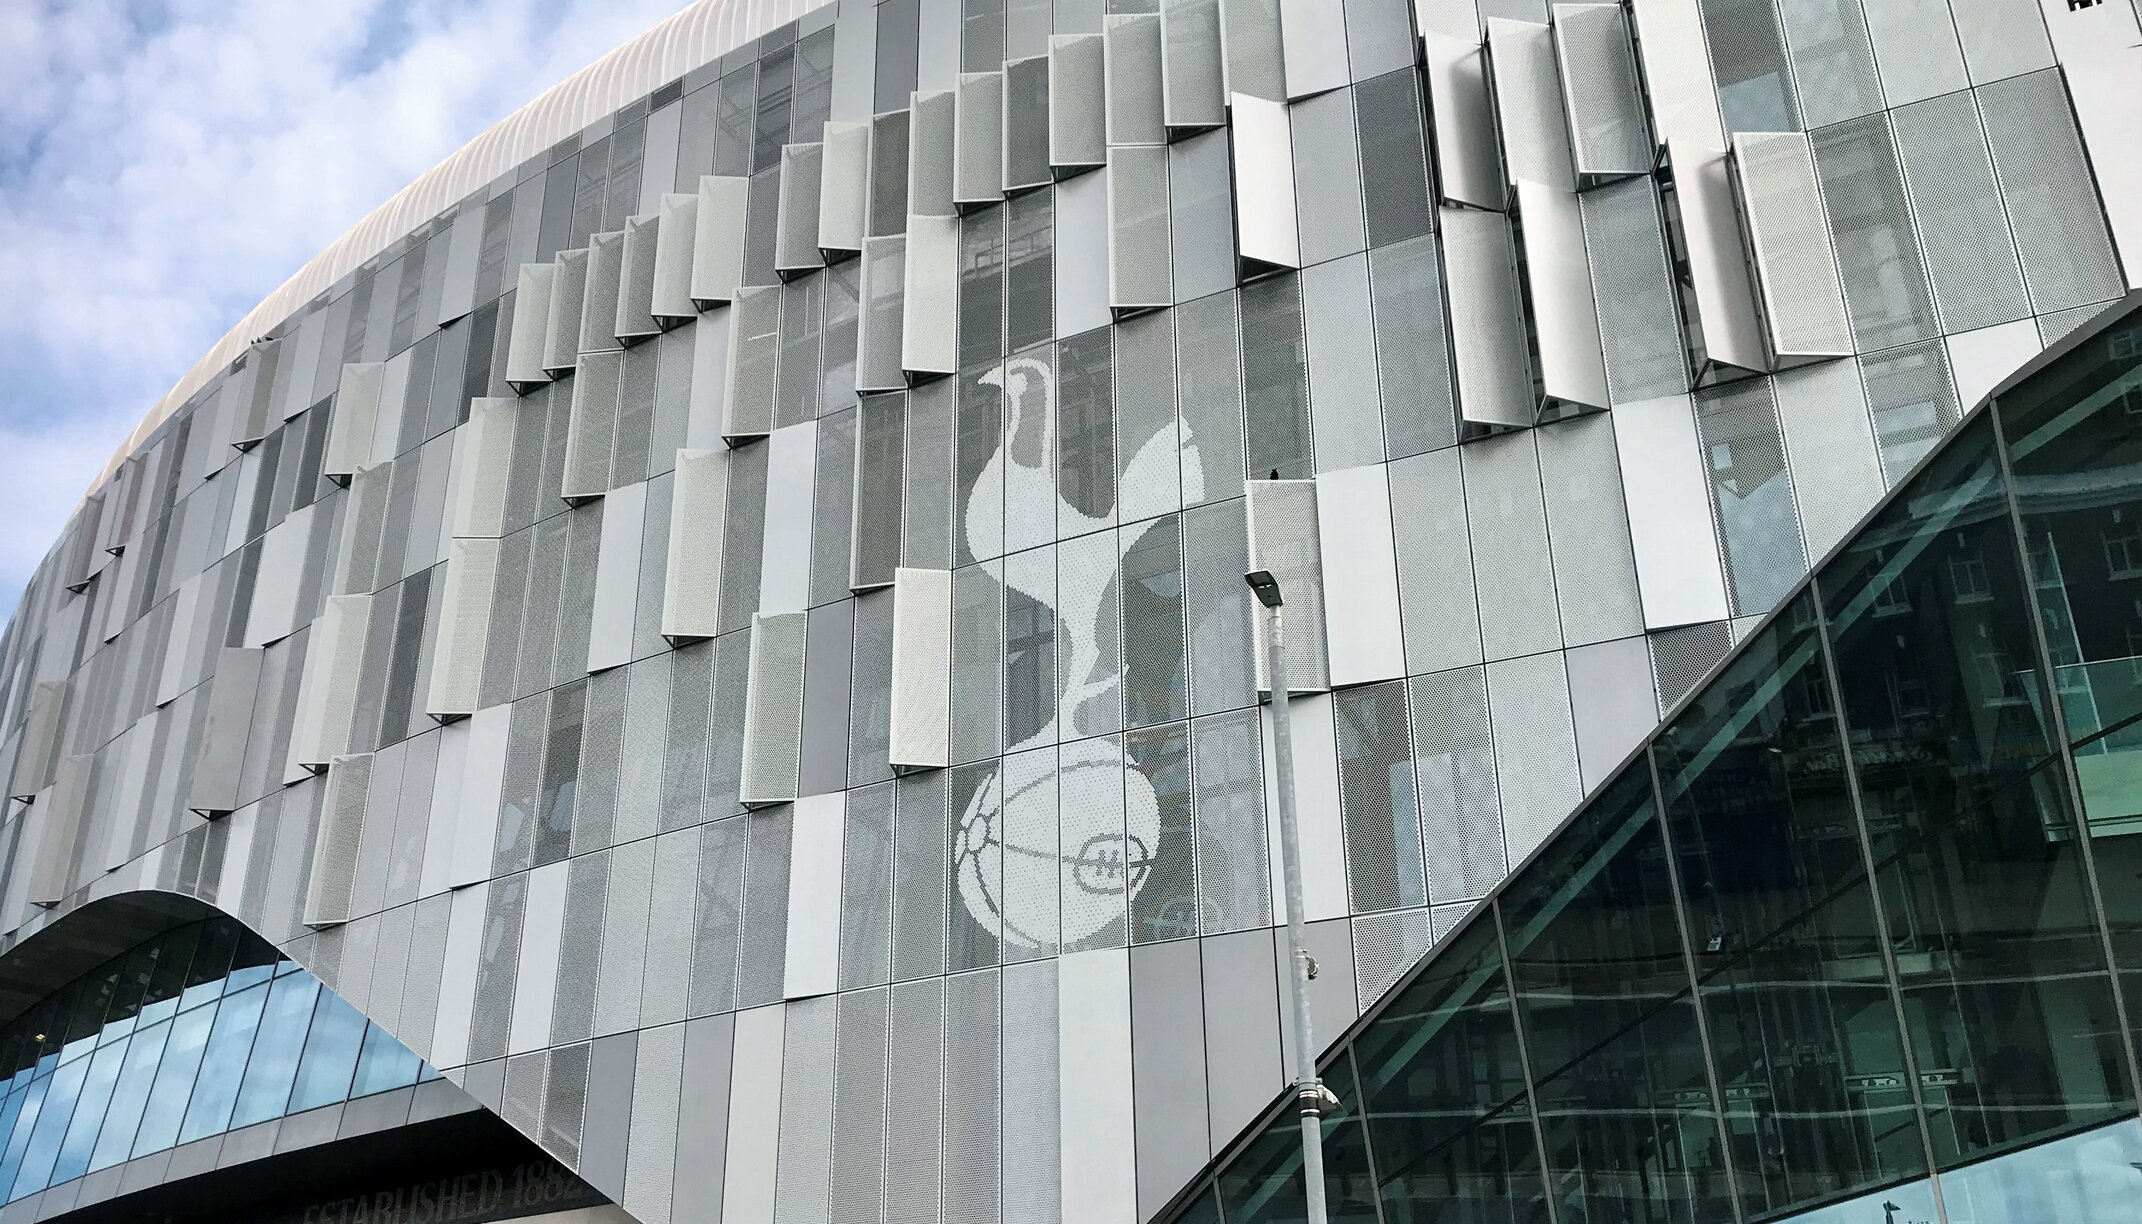 "Tottenham Stadion" hinterlüftete Fassade, Aluminium, London